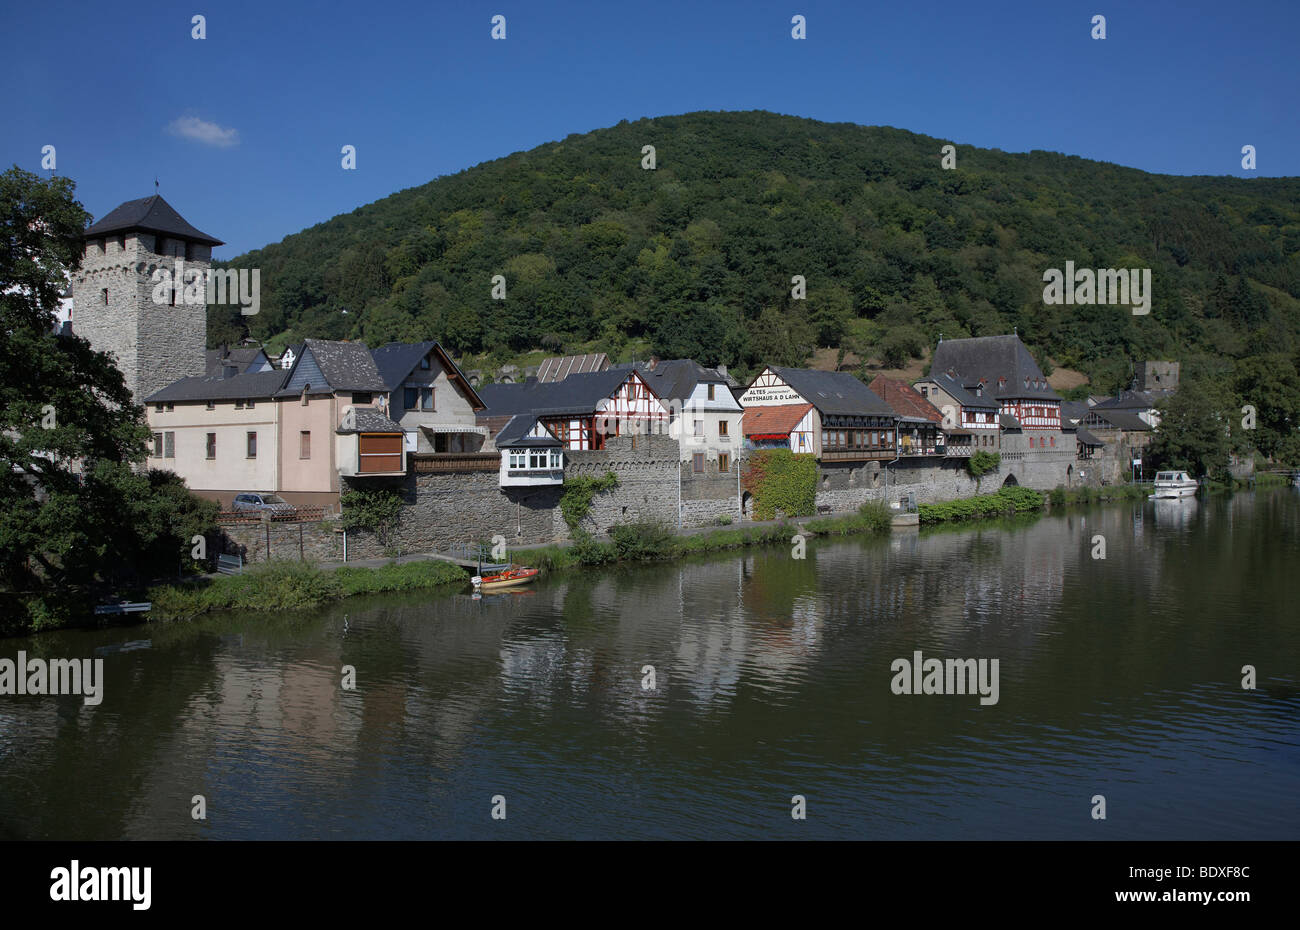 Dausenau on the Lahn river, Rhineland-Palatinate, Germany, Europe Stock Photo